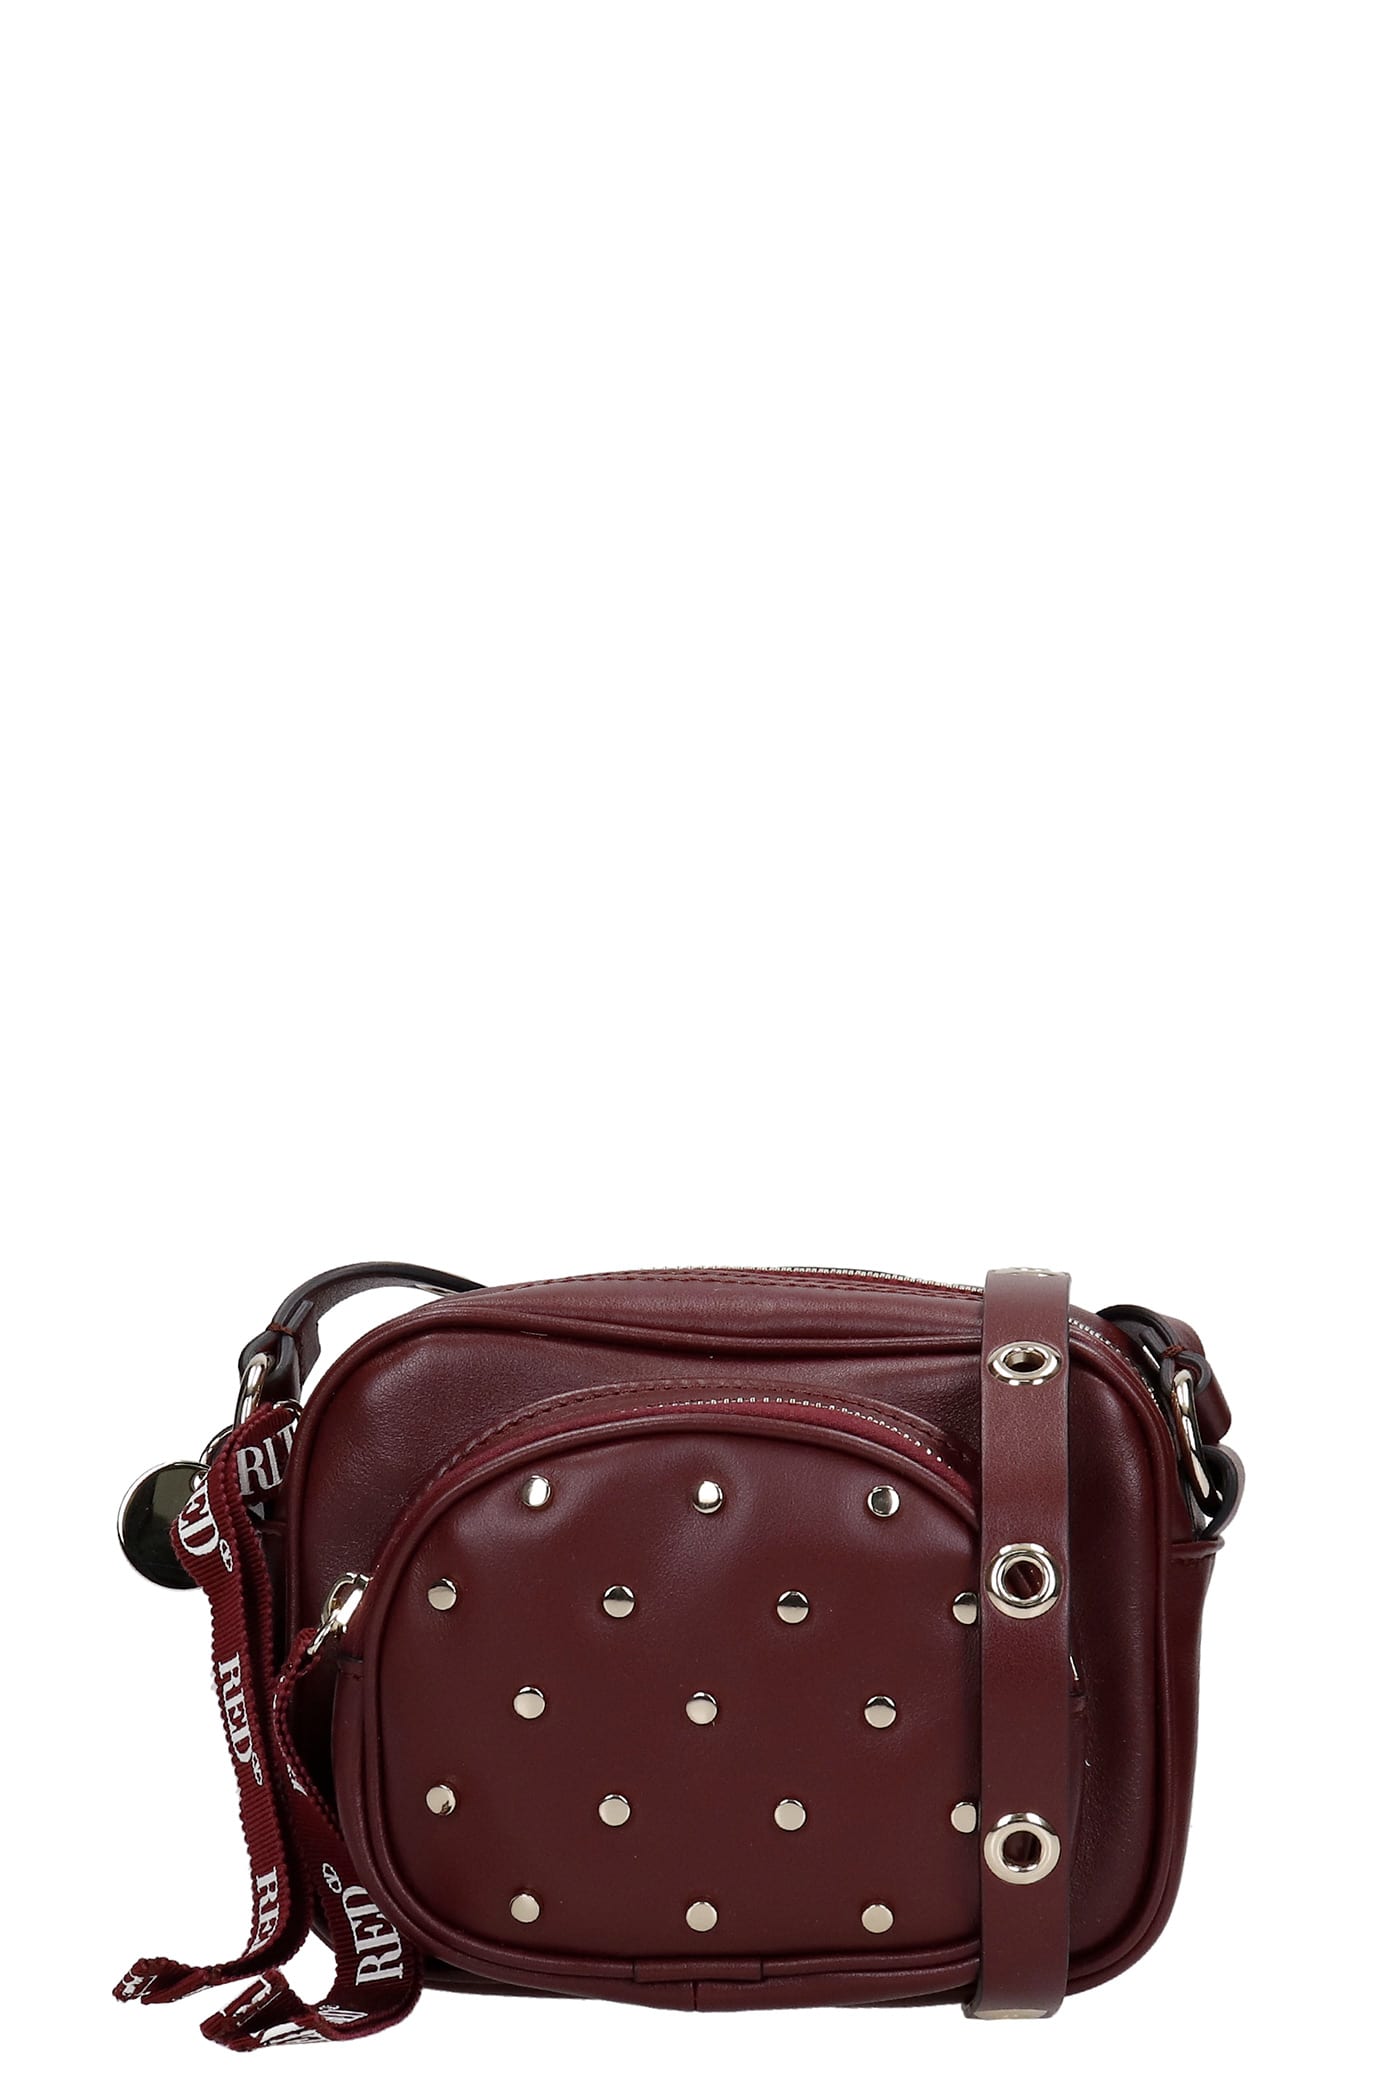 RED Valentino Shoulder Bag In Bordeaux Leather